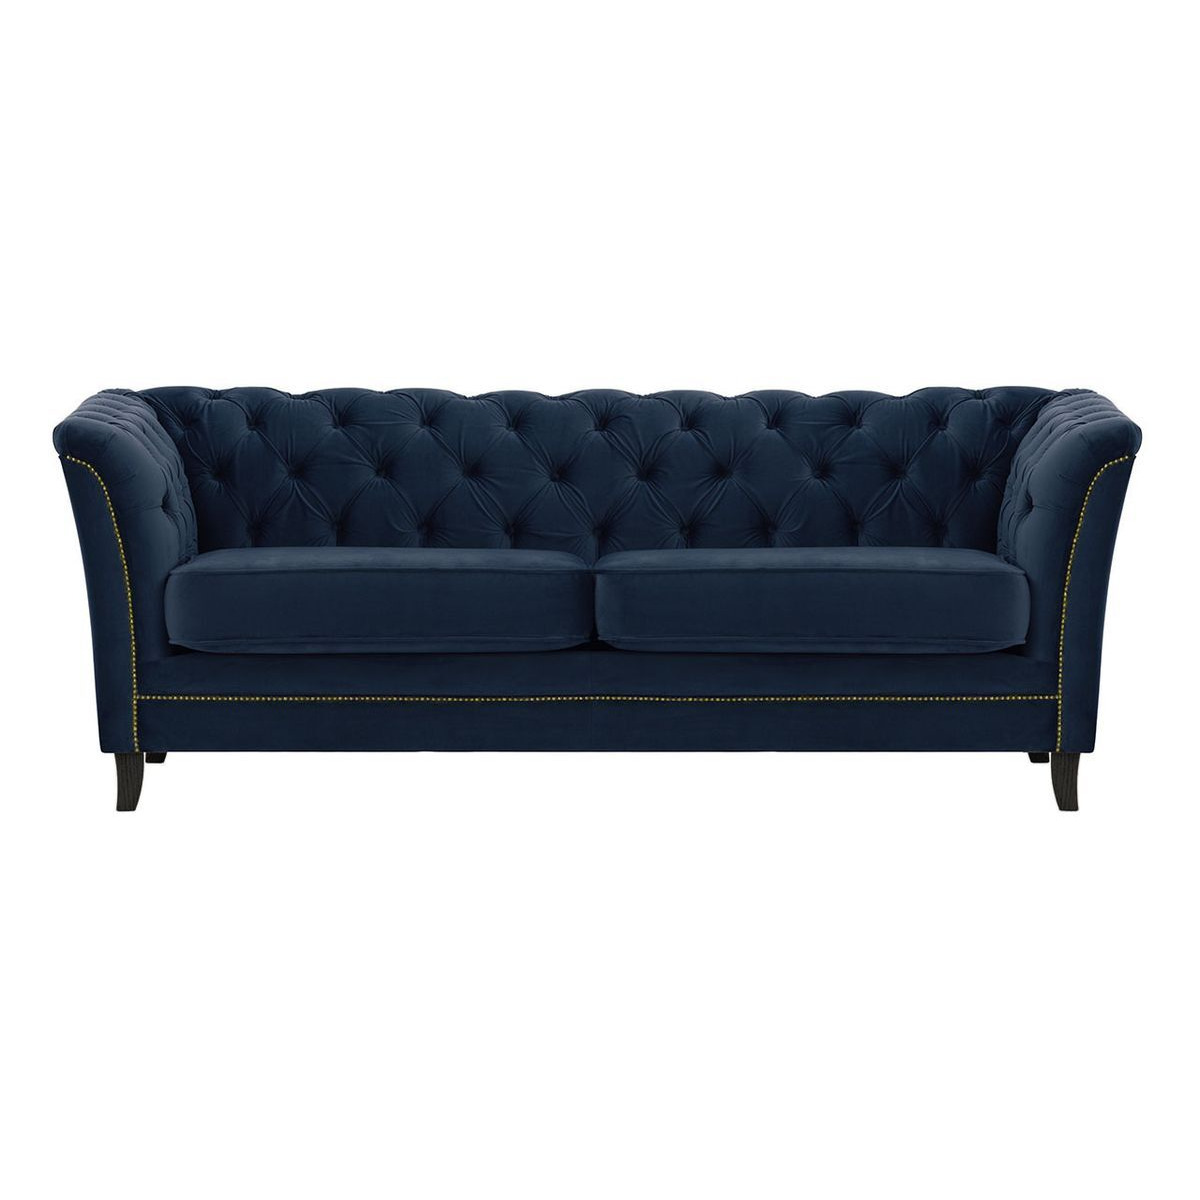 Karin 3 Seater Sofa, blue, Leg colour: black - image 1